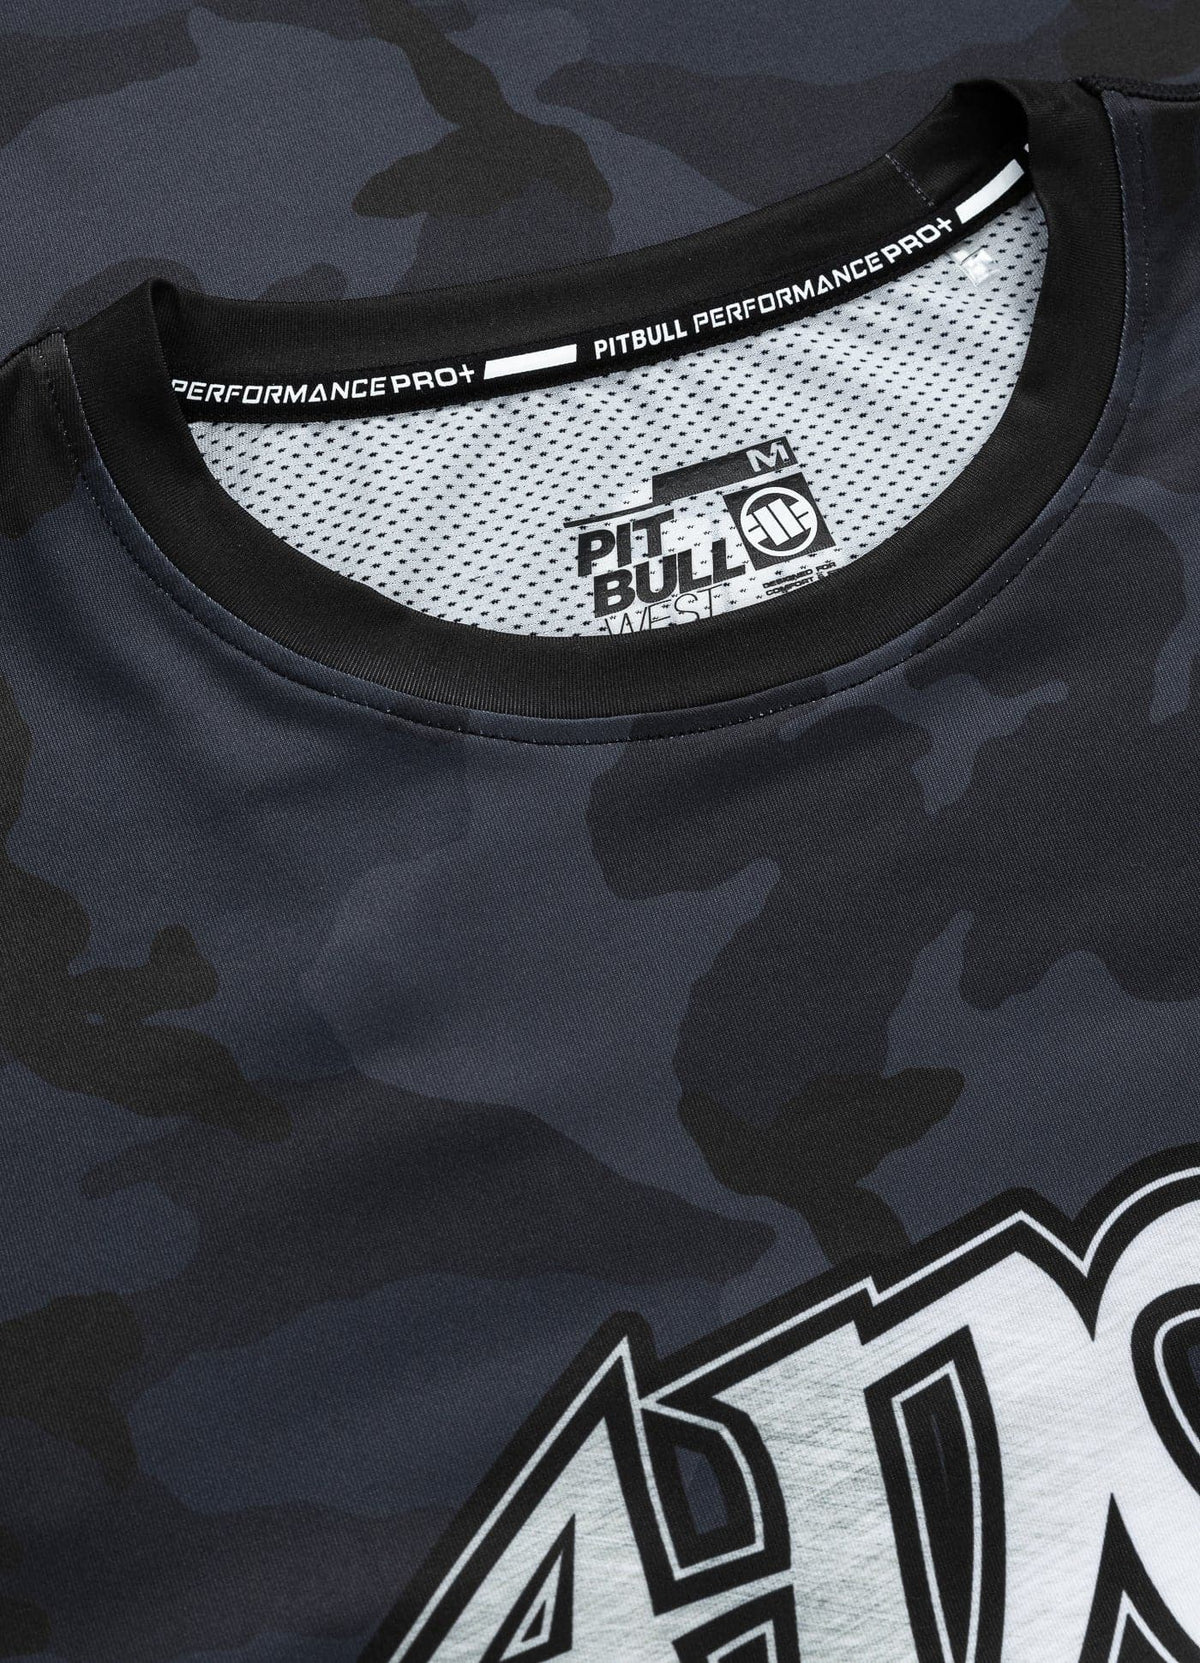 ADCC 2 All Black Camo Mesh T-shirt - Pitbull West Coast International Store 